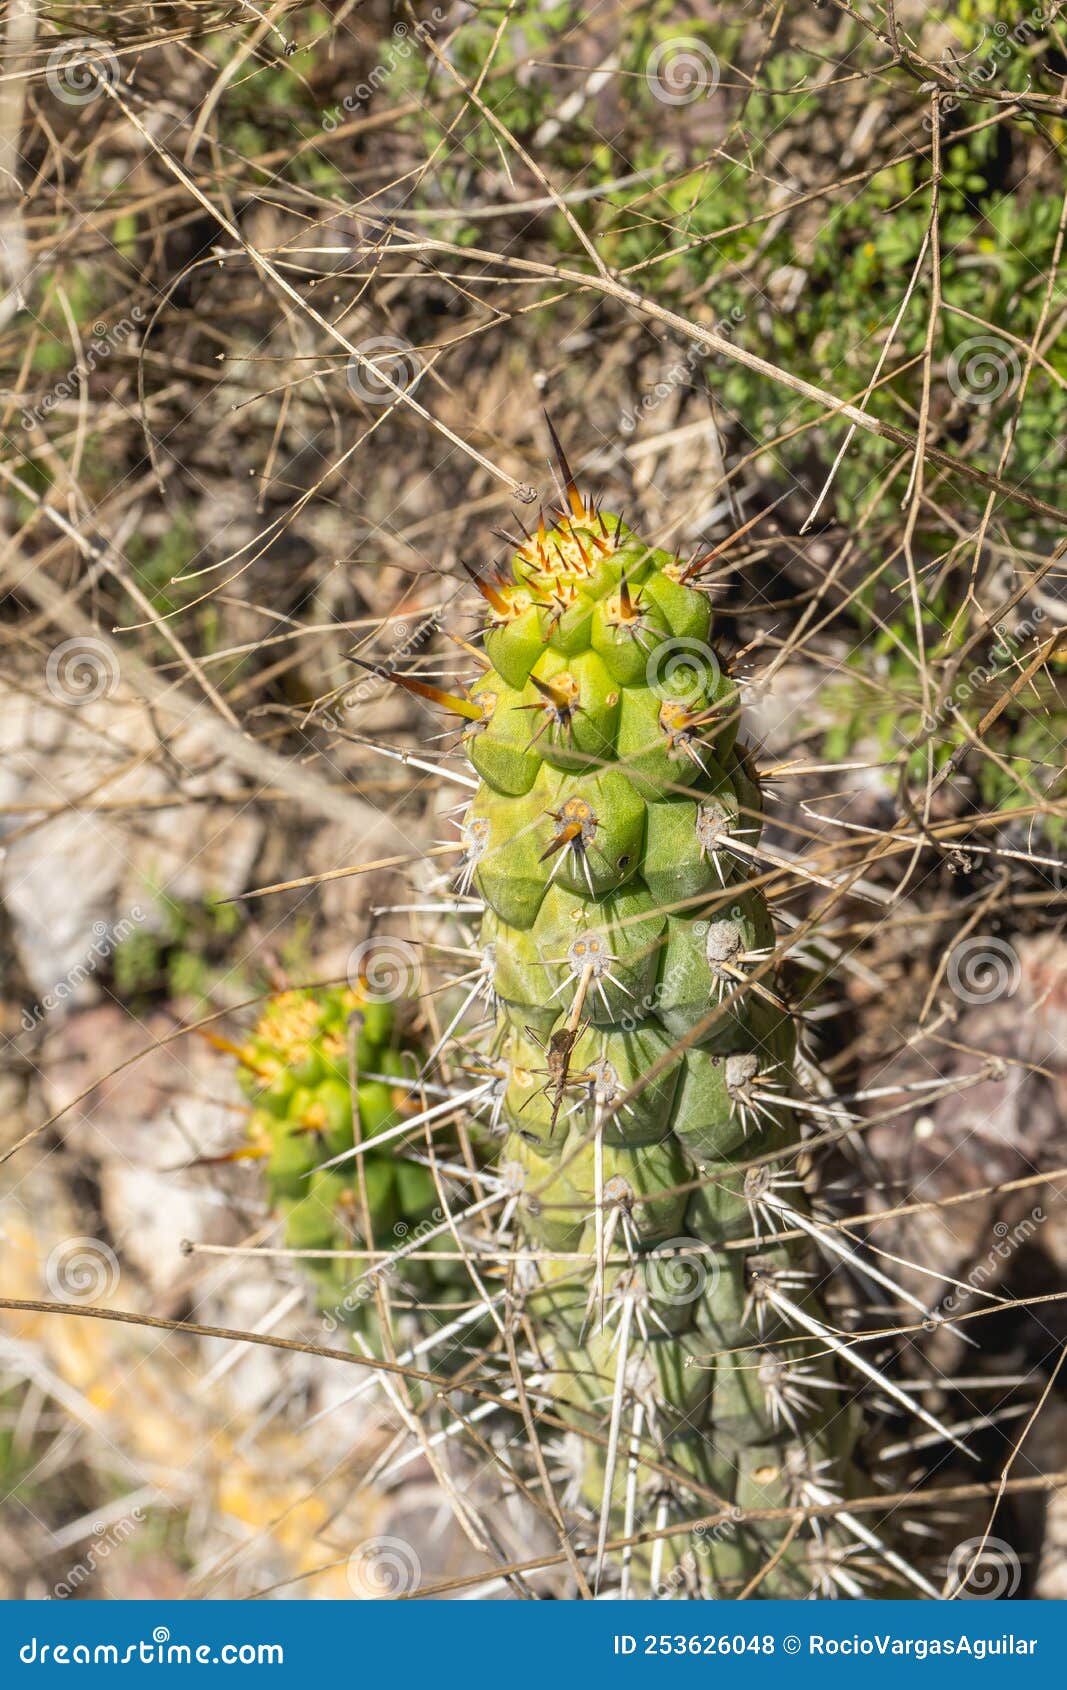 cactus plant palo de espinas, also known as opuntia cylindrica (lam.) dc. species